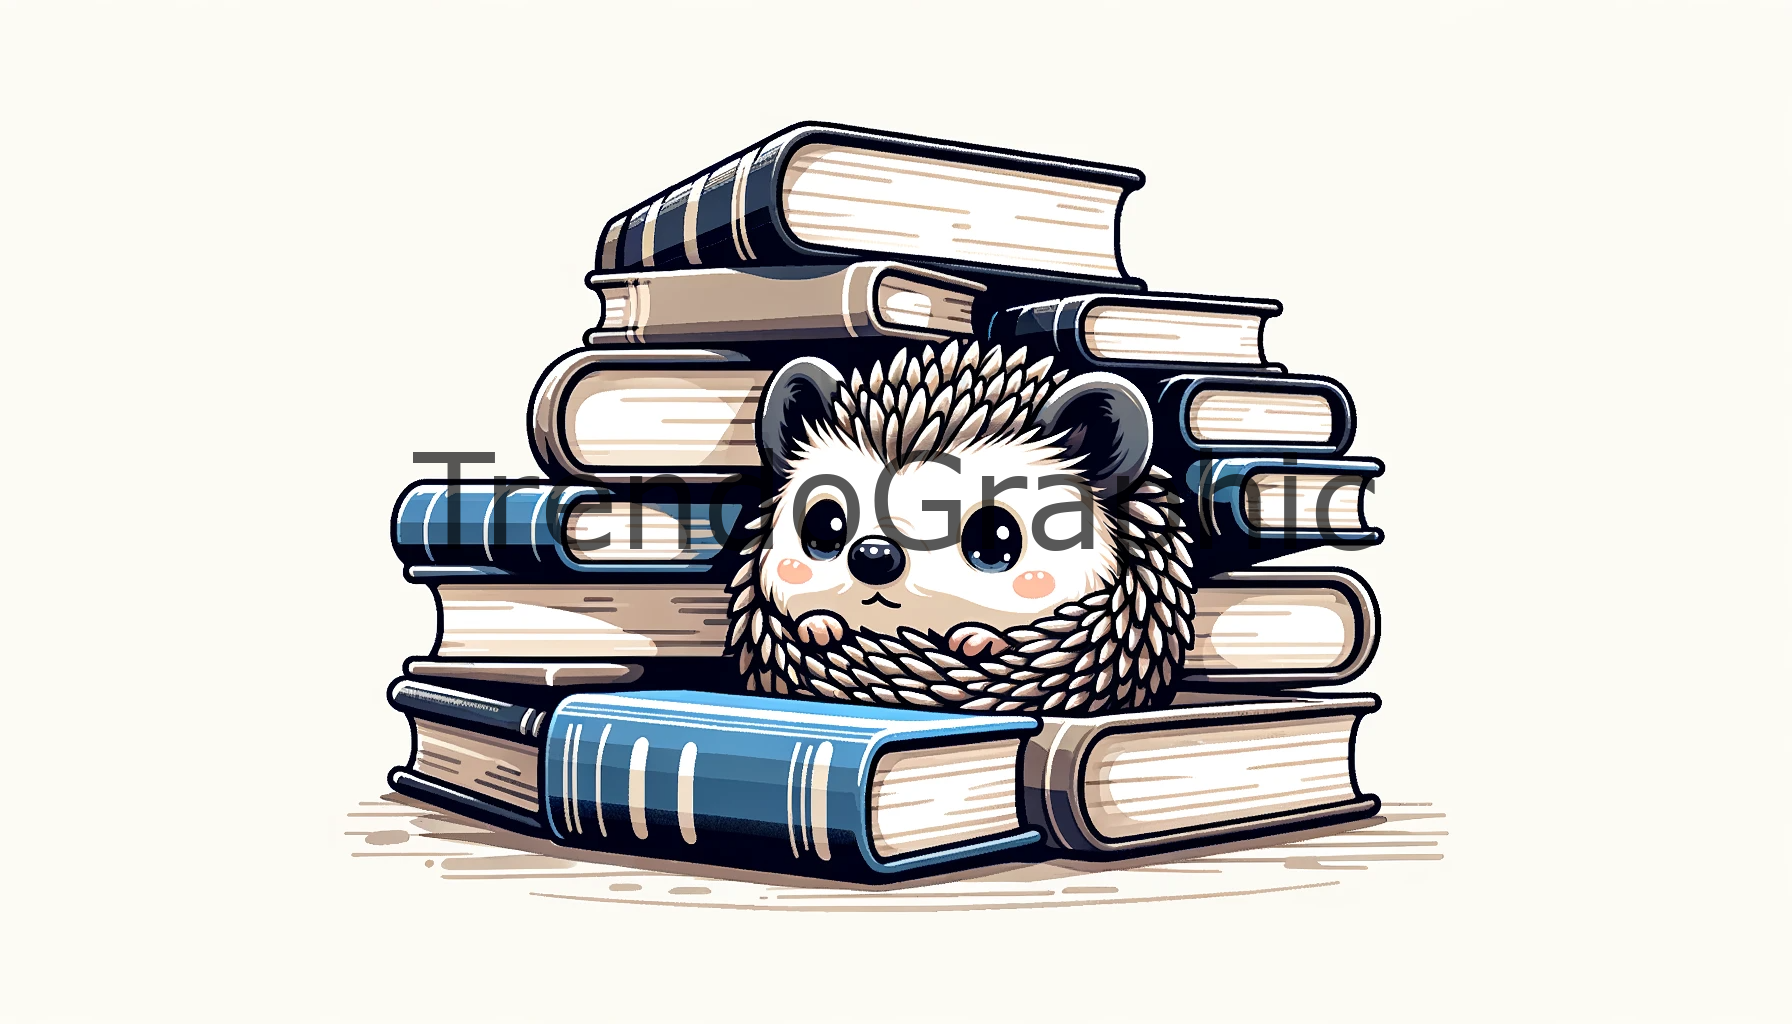 Charming Hedgehog Among Books – A Peek into Whimsy